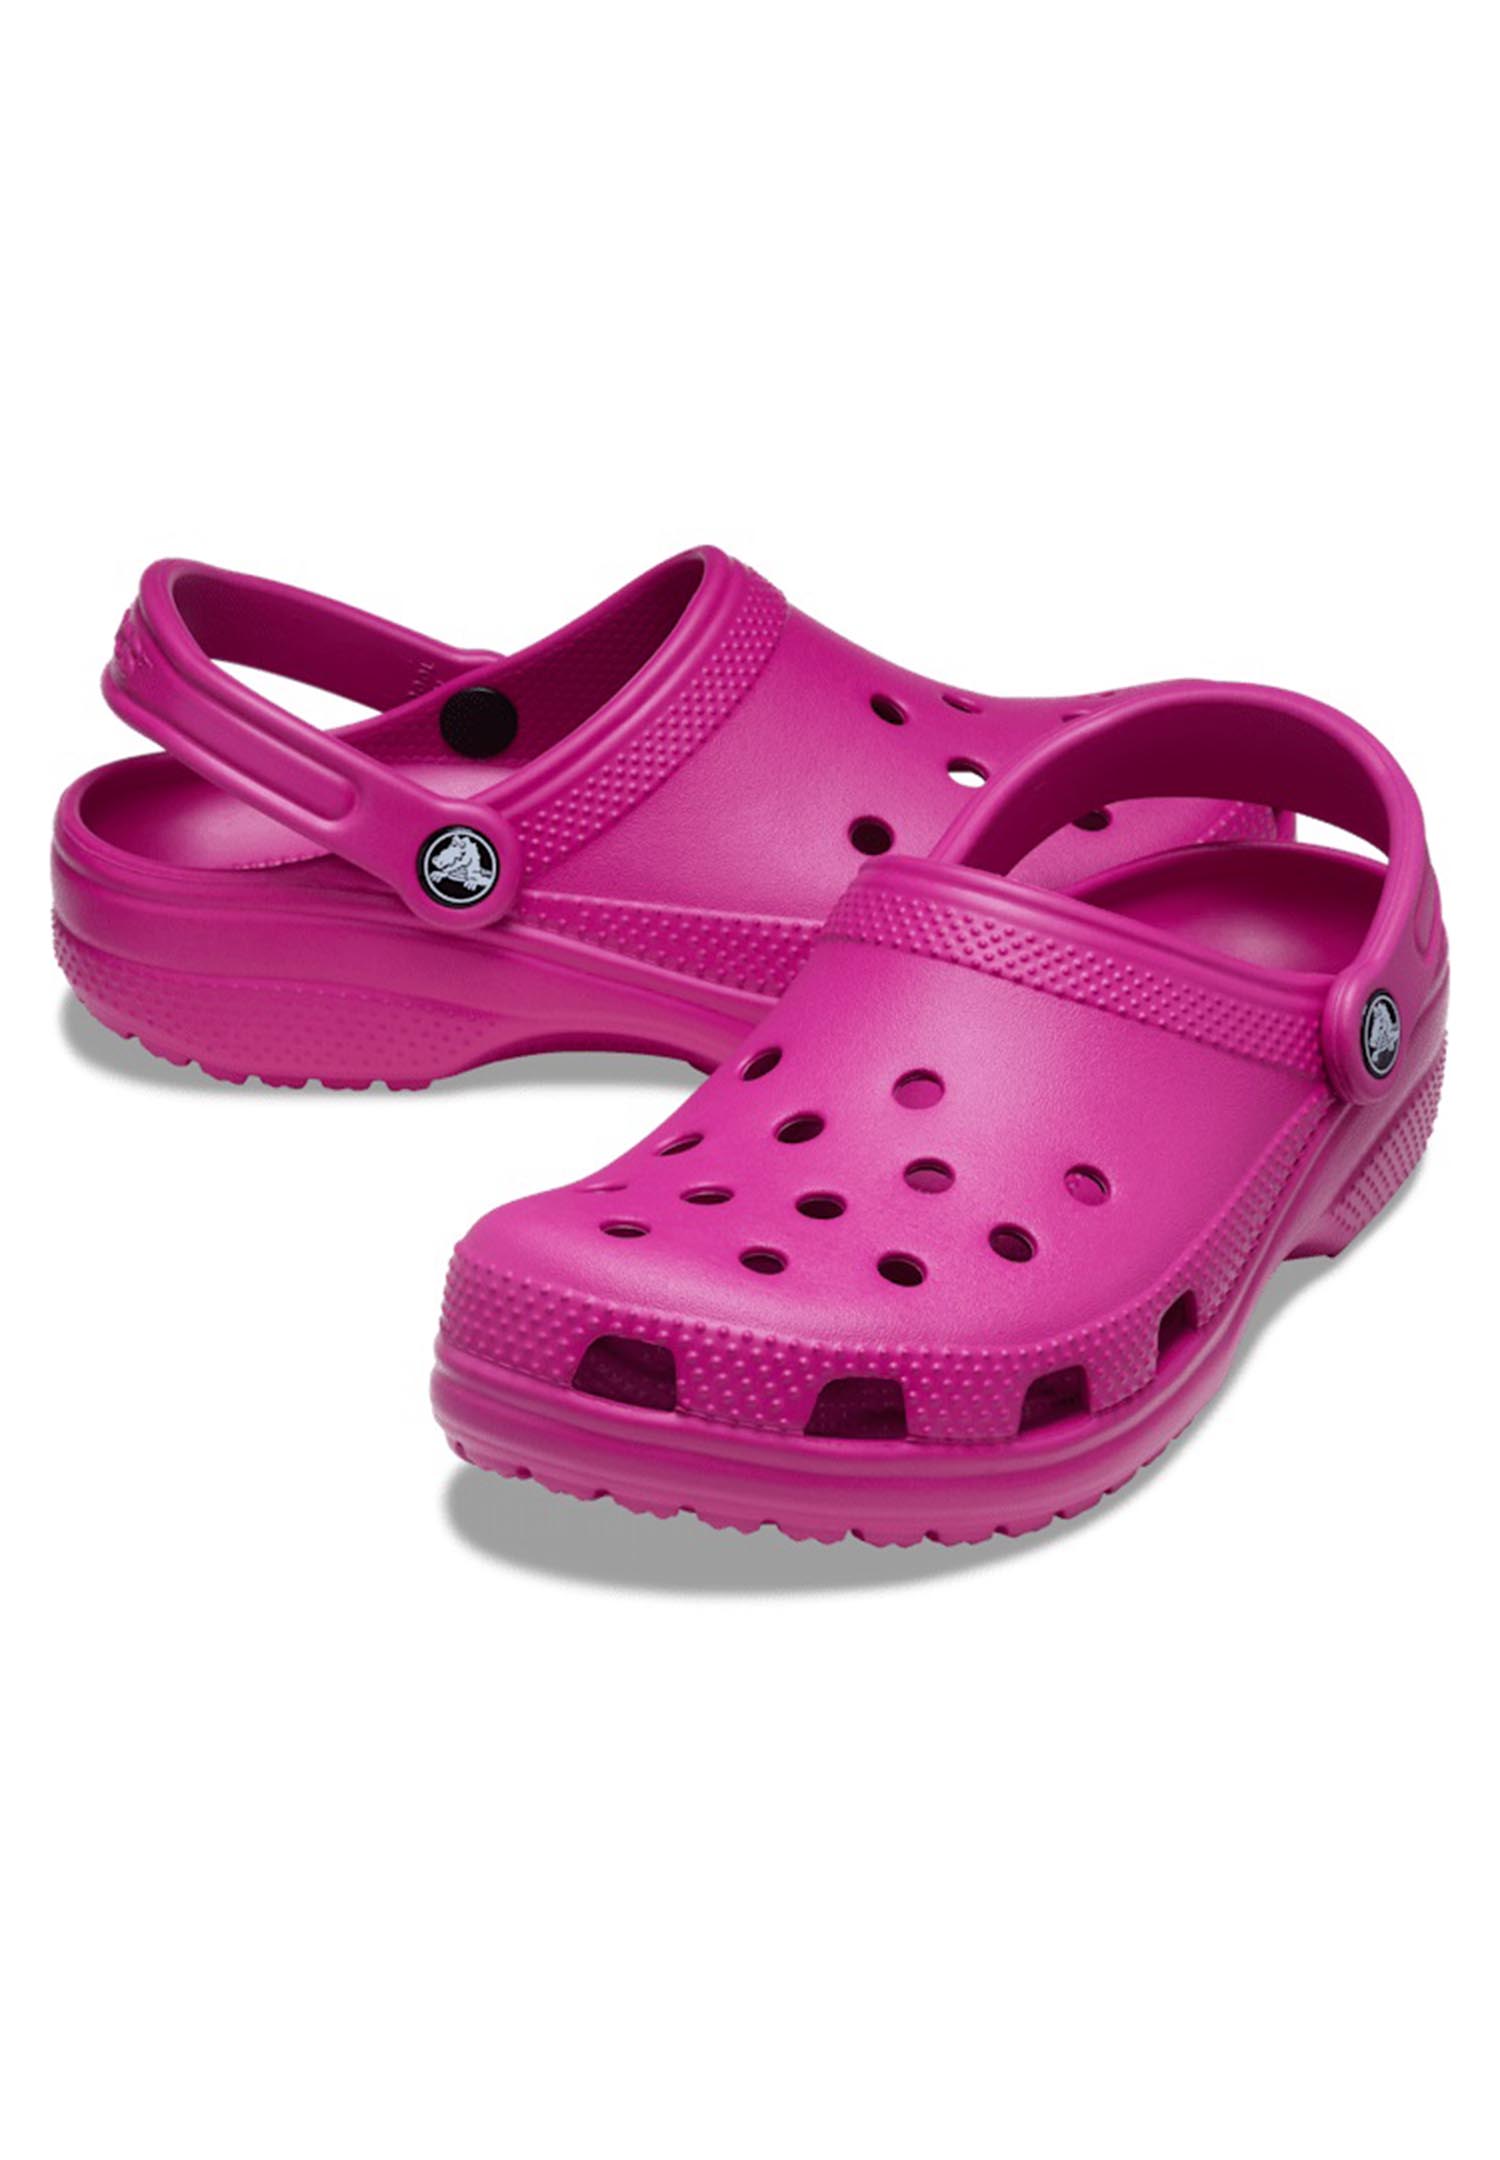 Crocs Classic Clog Unisex Erwachsene 10001 6SV pink von Crocs